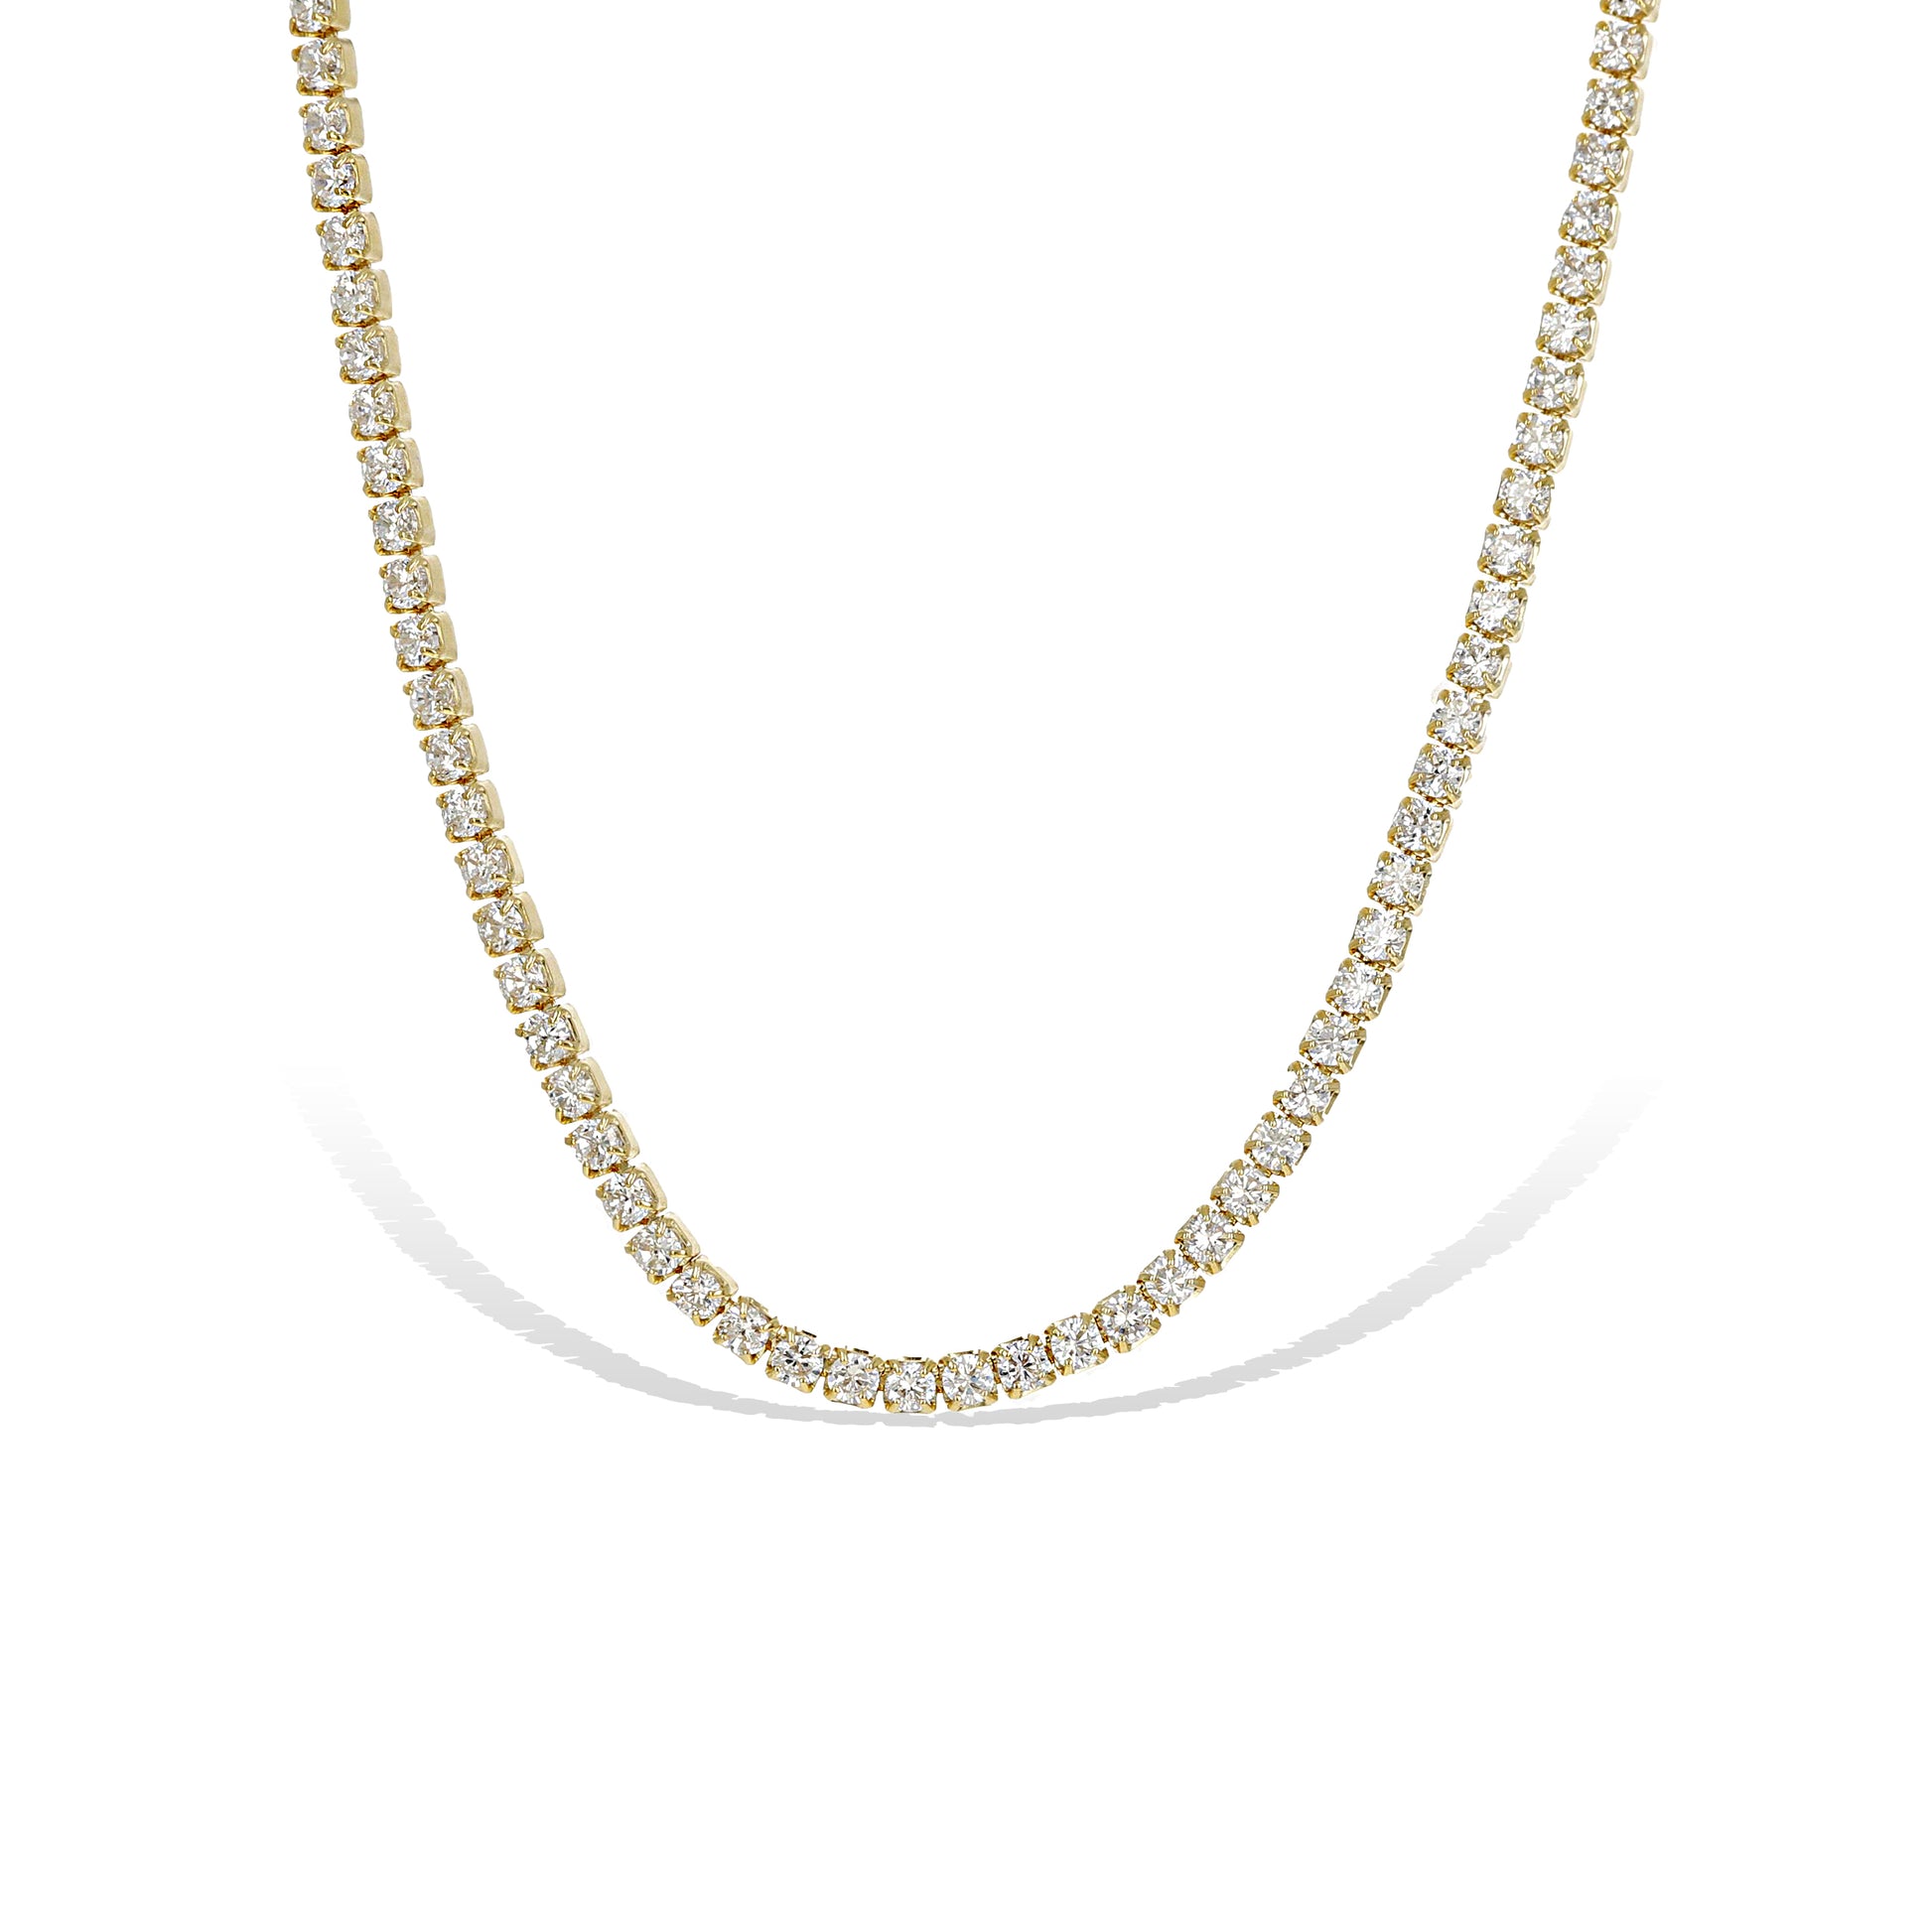 Gold thin cz tennis choker necklace - Alexandra Marks Jewelry